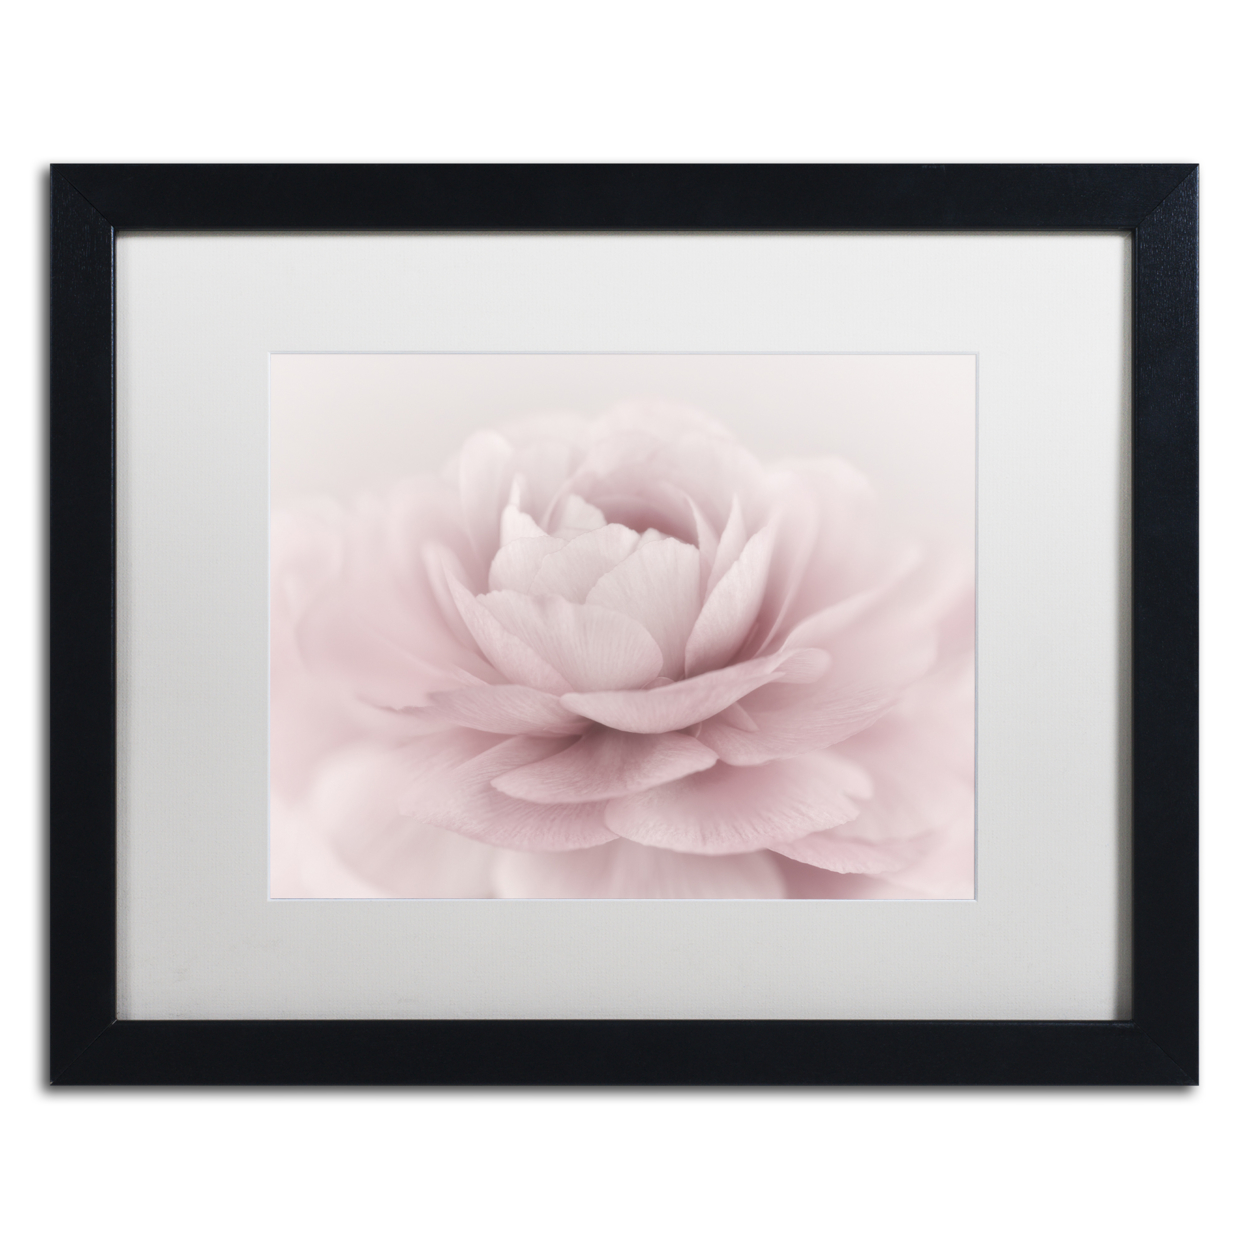 Cora Niele 'Stylisch Rose Pink' Black Wooden Framed Art 18 X 22 Inches